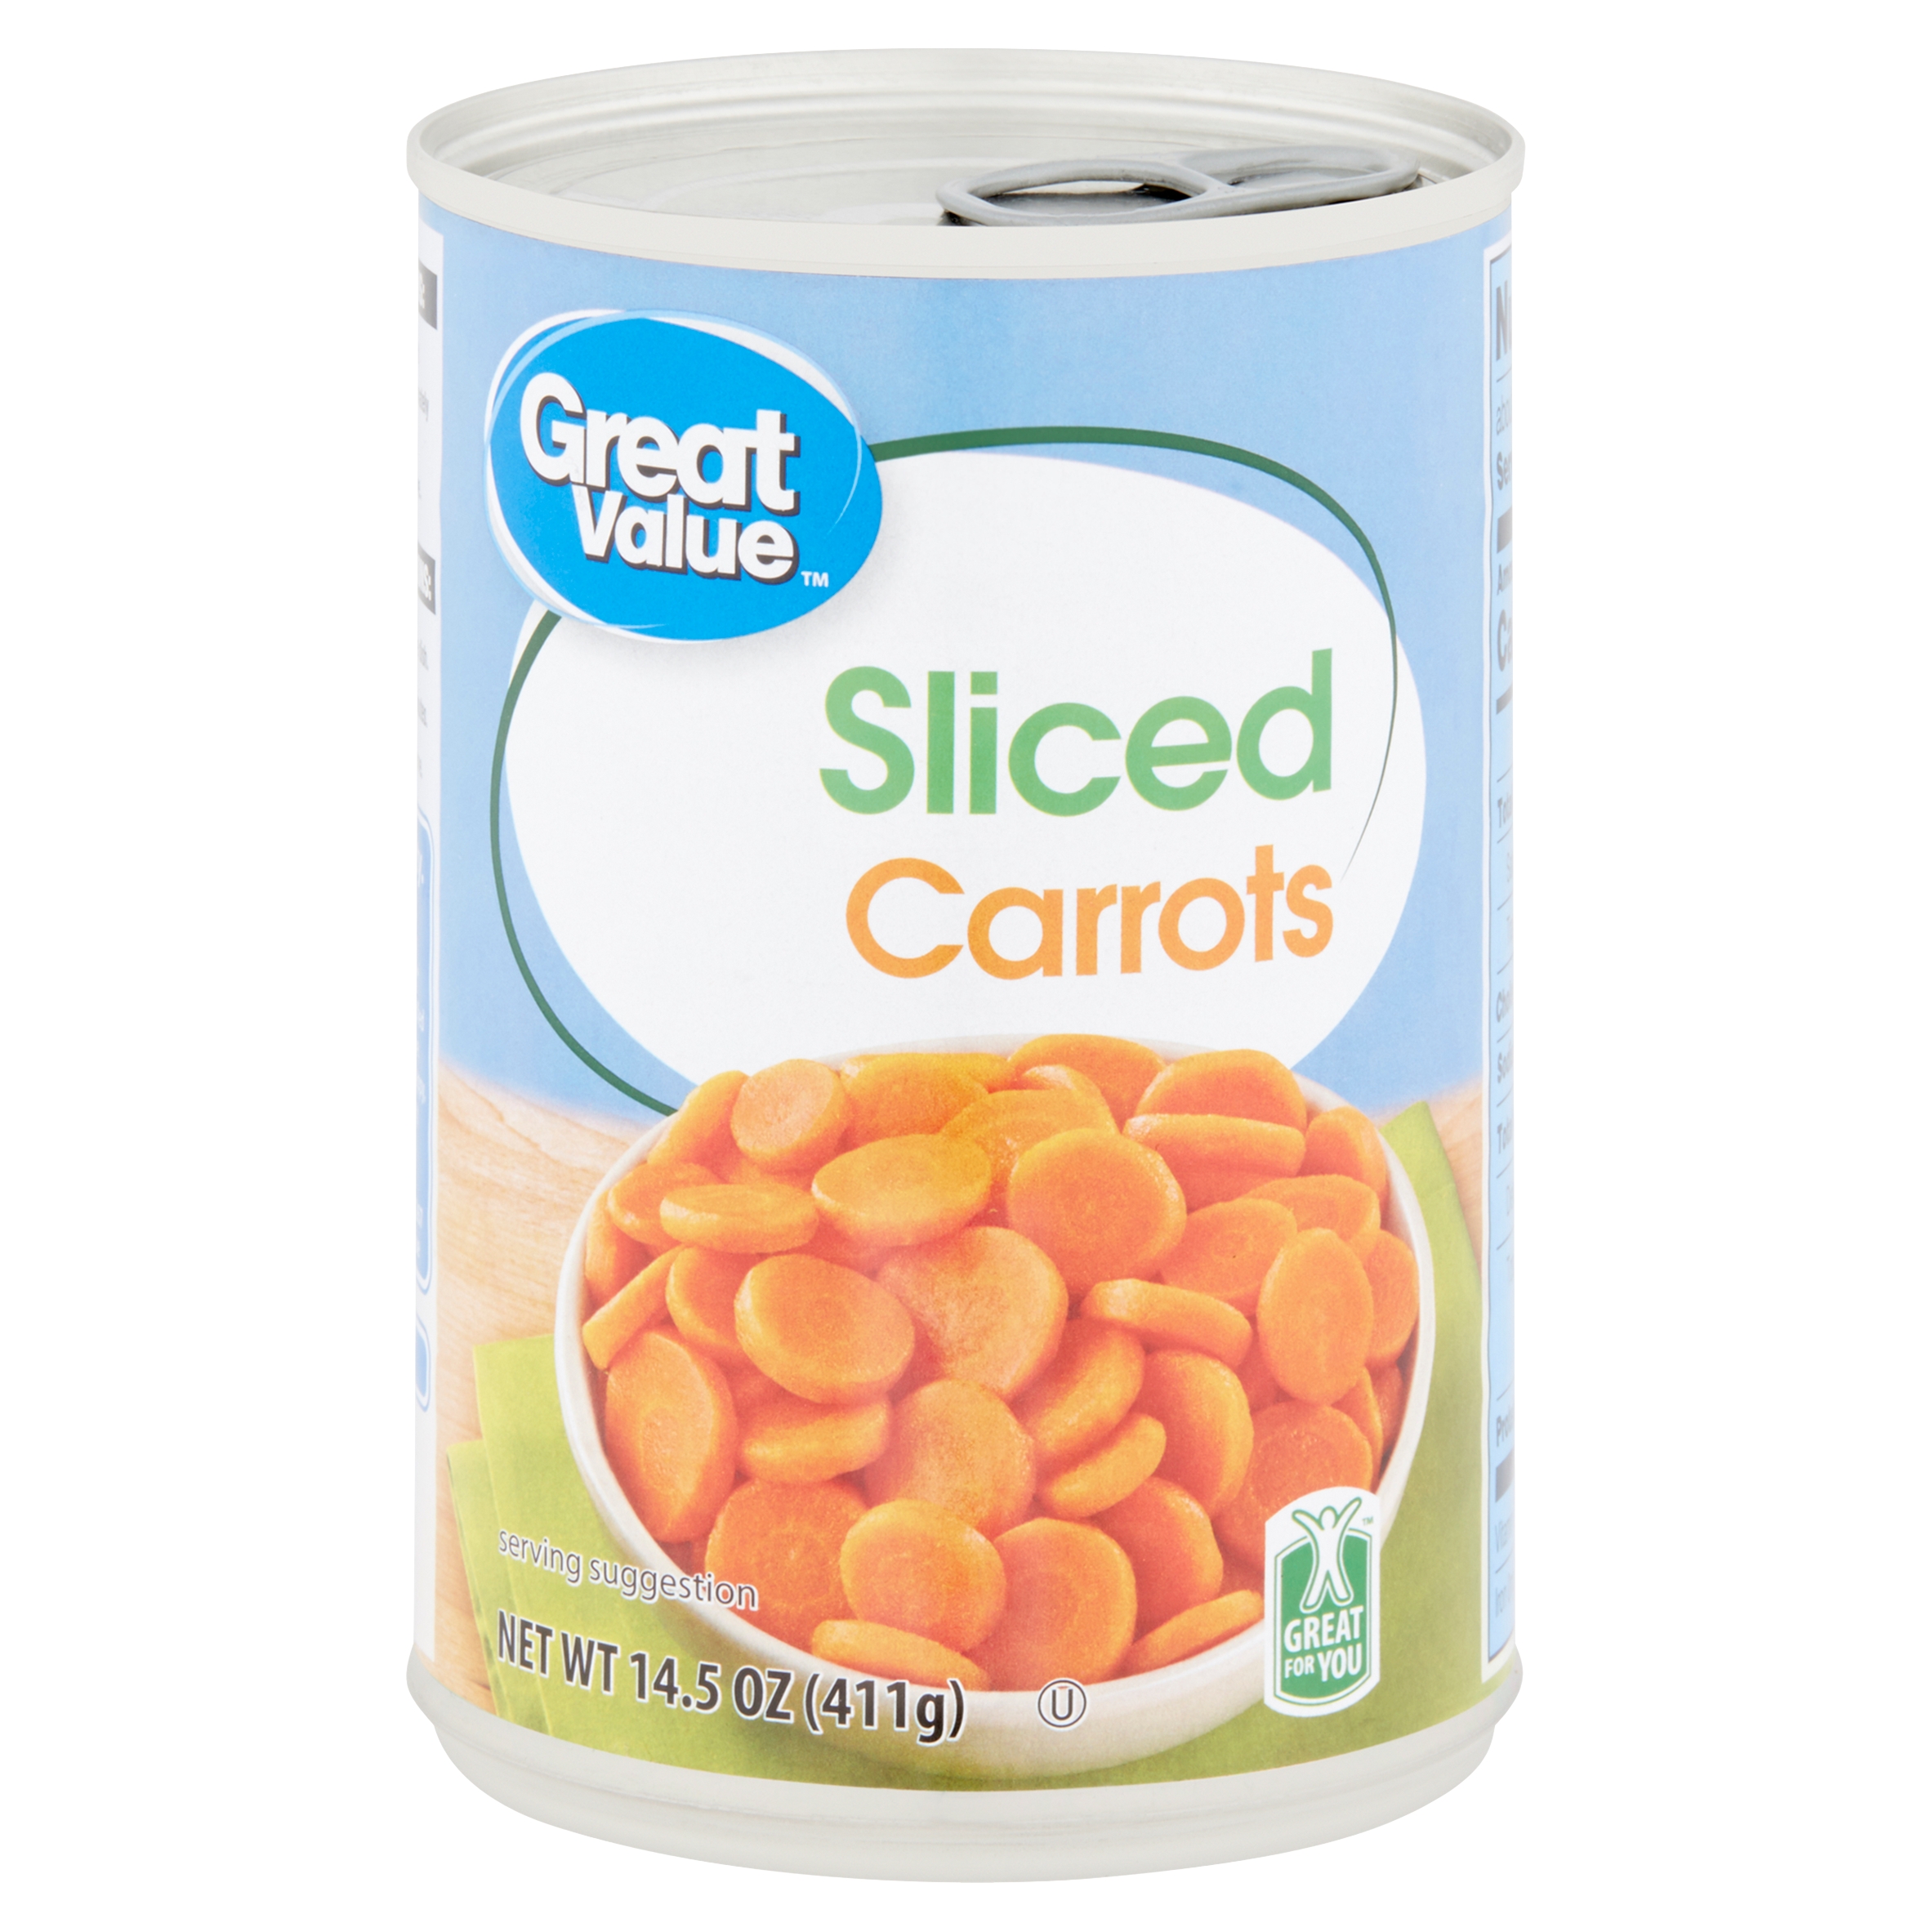 Great Value Sliced Carrots, 14.5 Oz Image